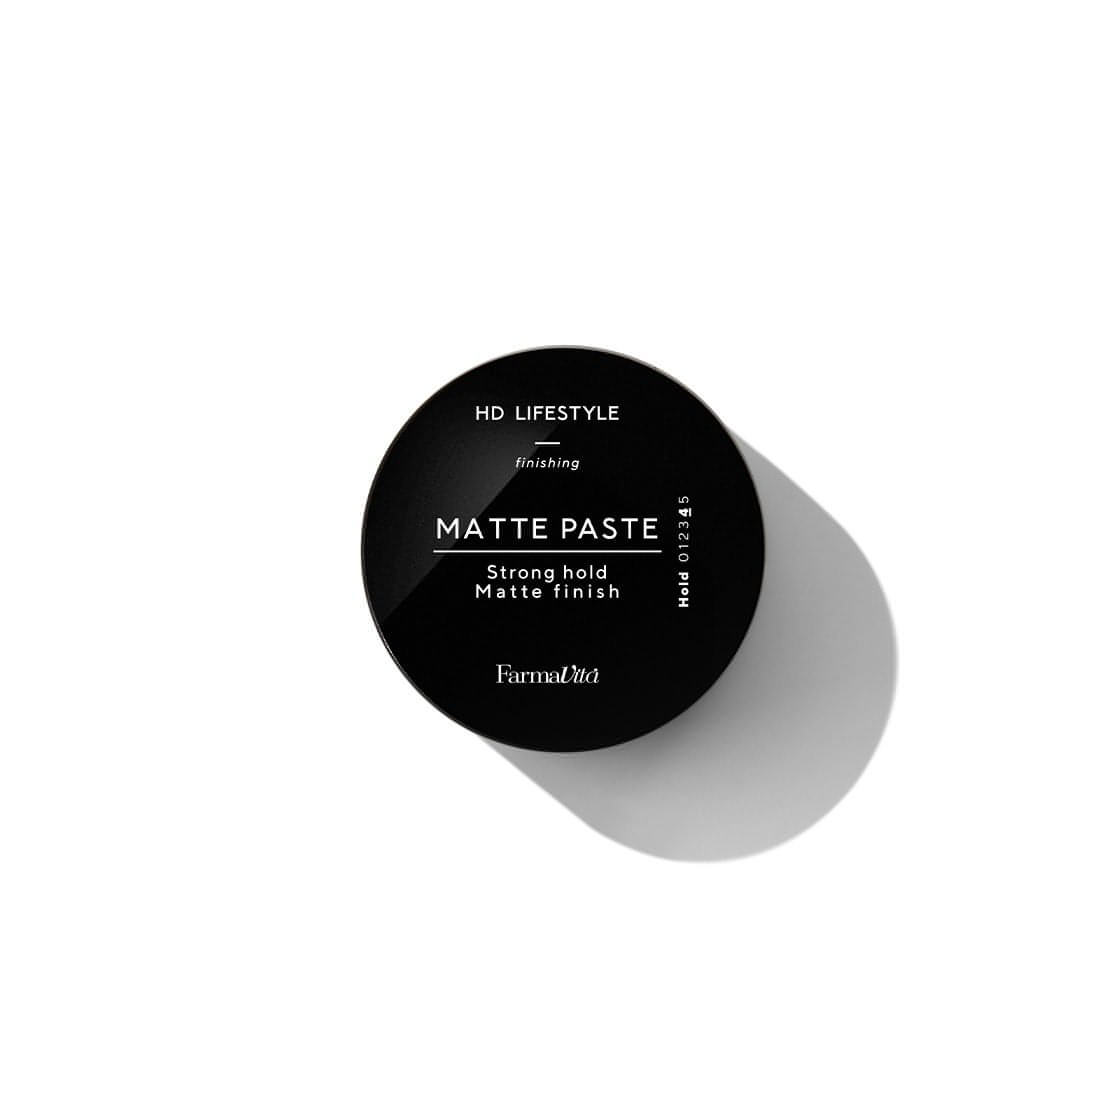 NEW HD Life Style Matte Paste - 50ml